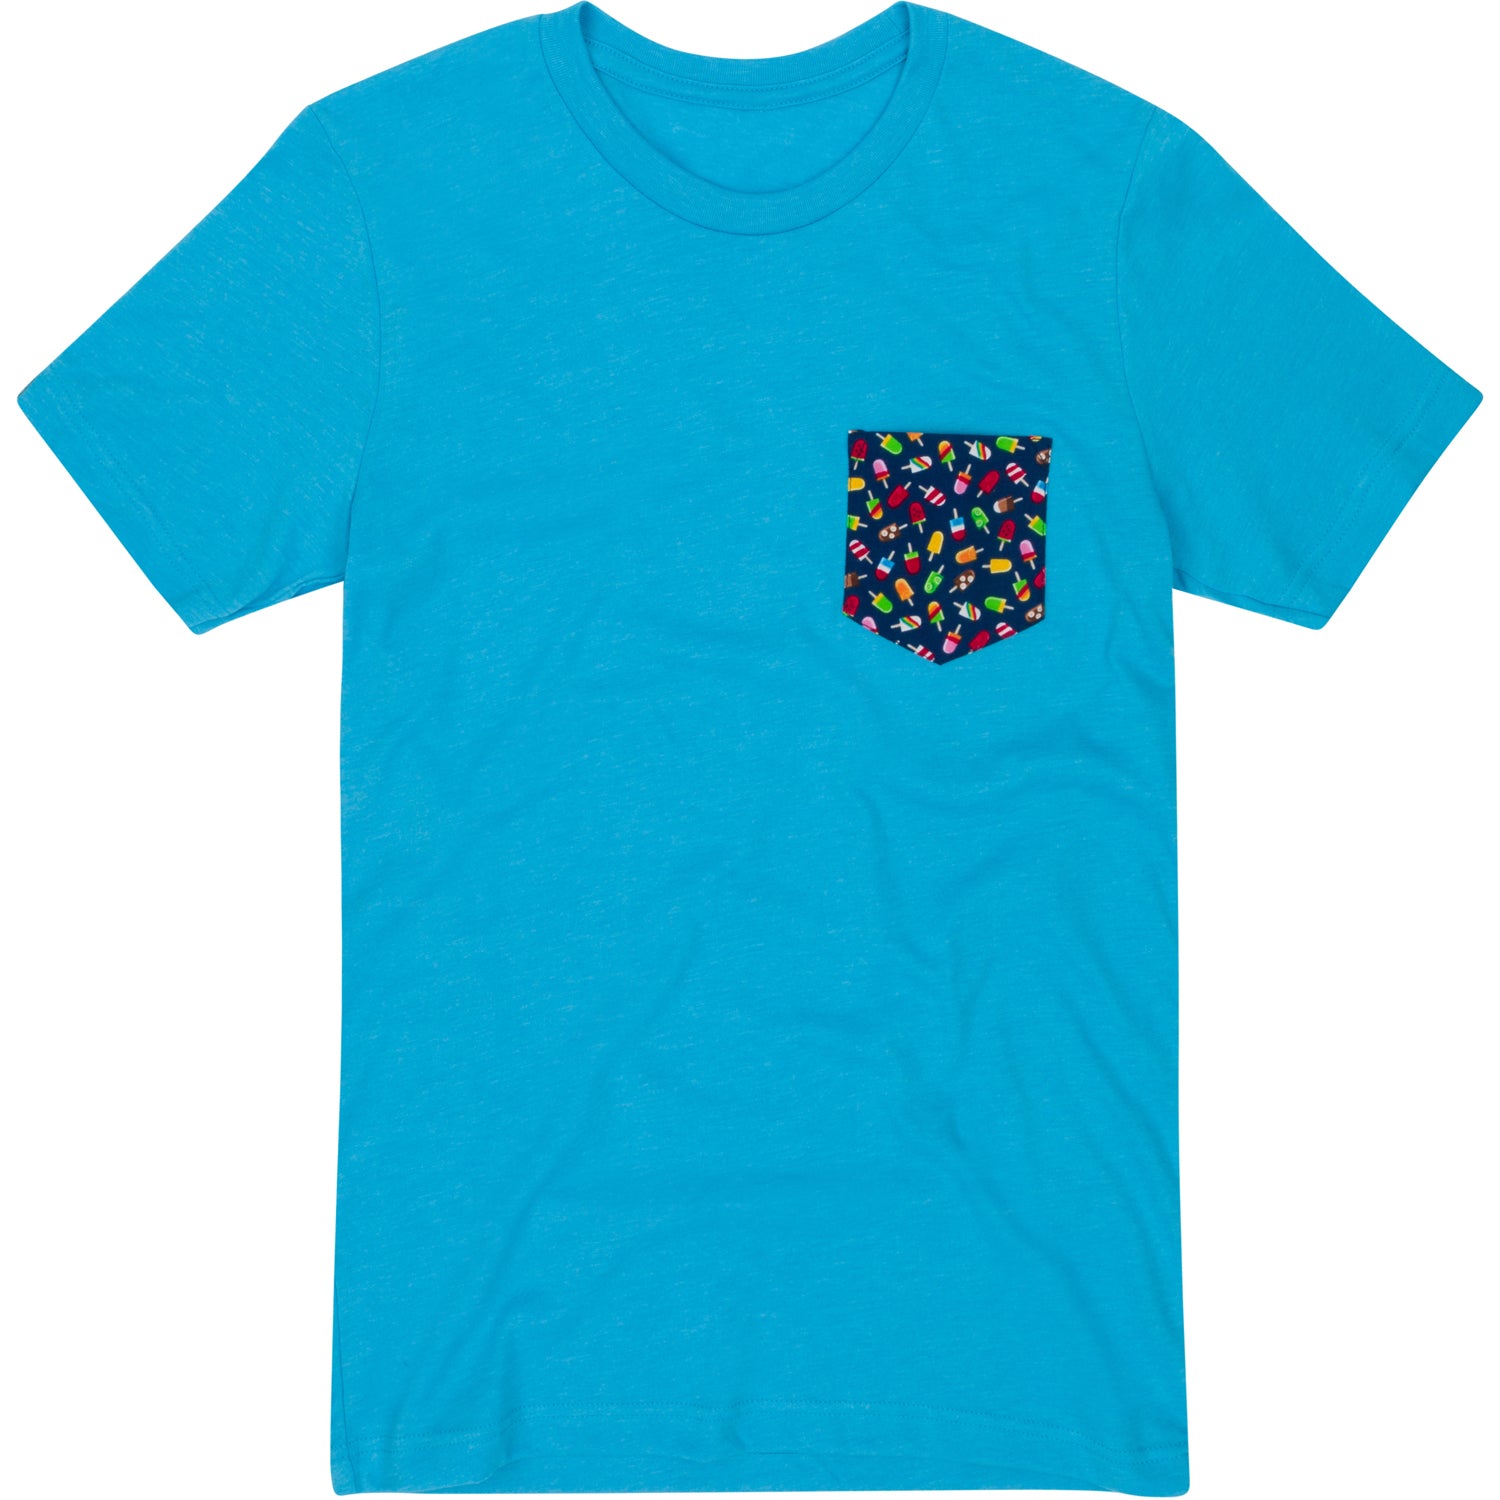 Aqua With Boardwalk Ice Pops Pocket T-Shirt